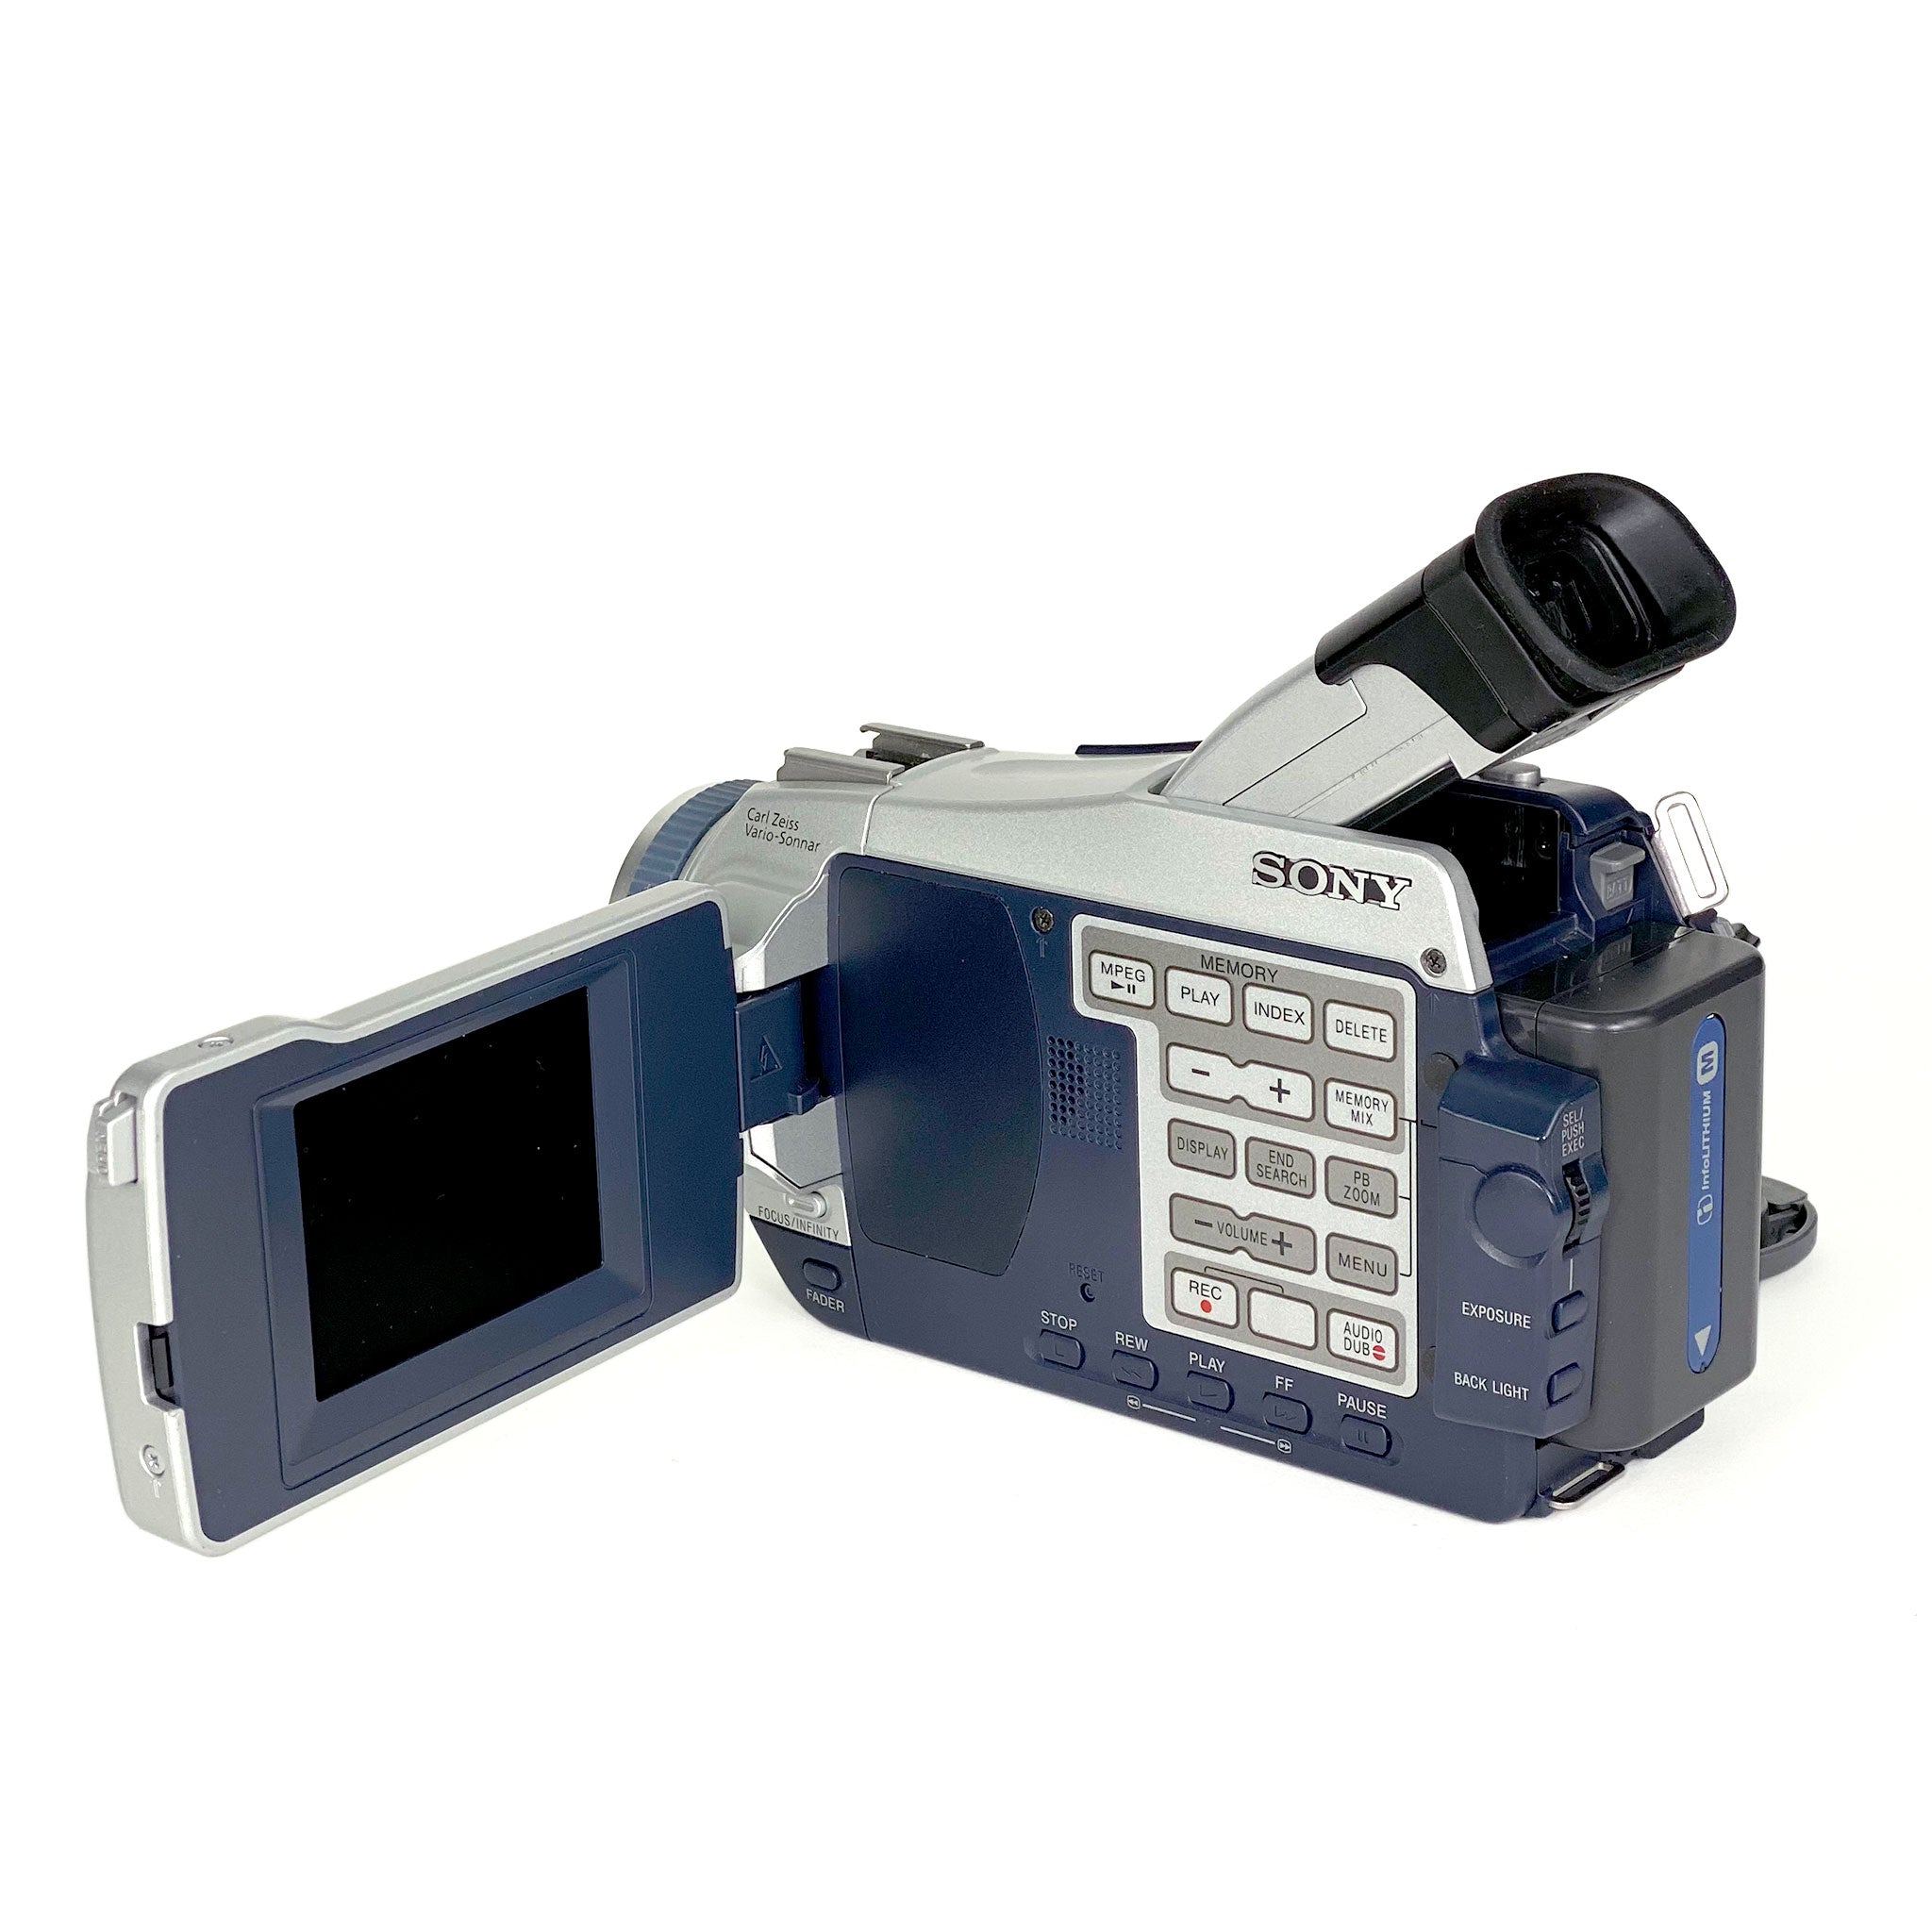 Sony Handycam DCR-TRV18E PAL MiniDV Camcorder